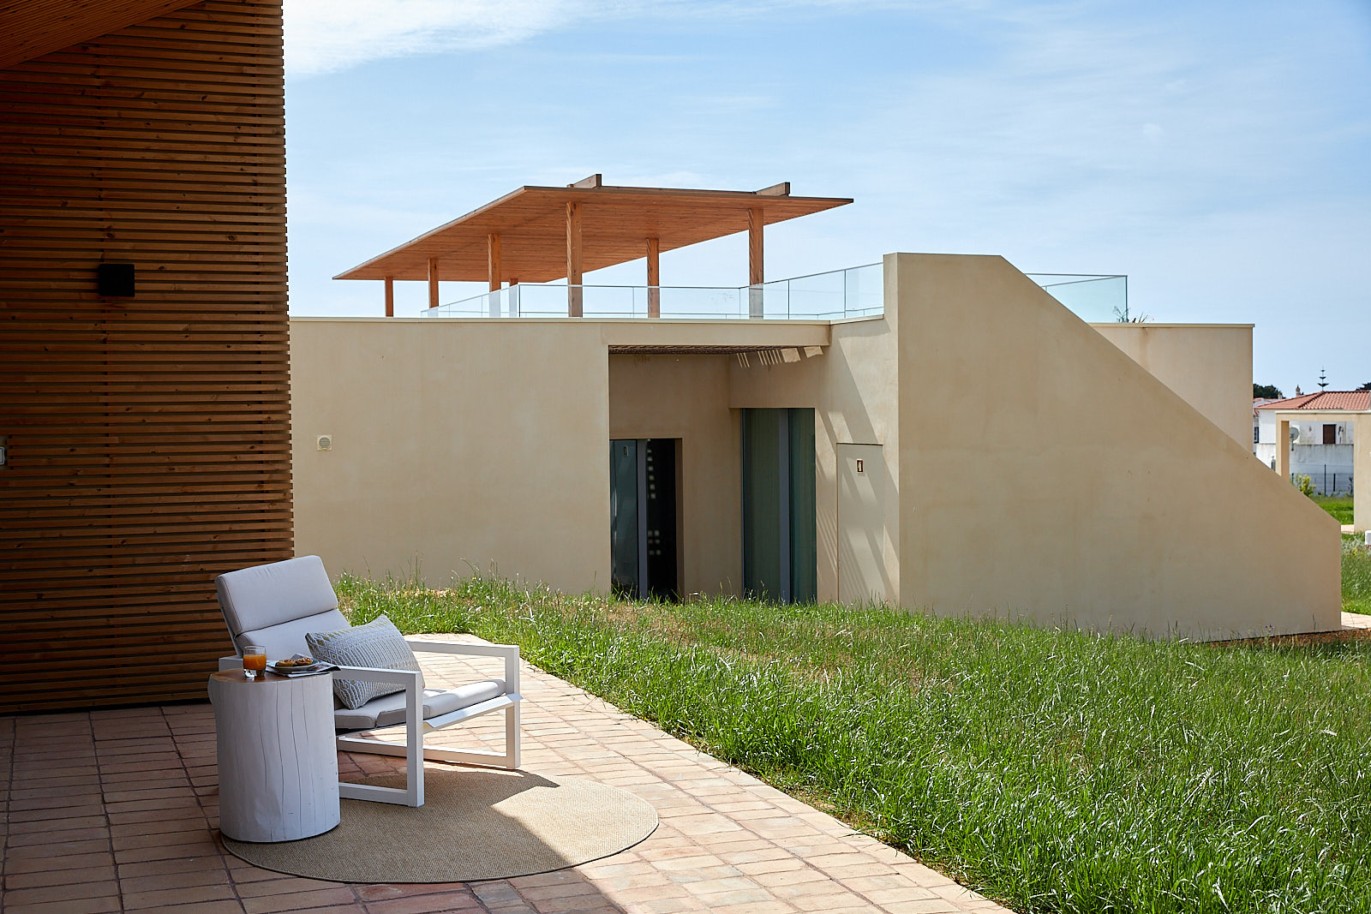 2 bedroom apartment in resort, for sale in Porches, Algarve_229160